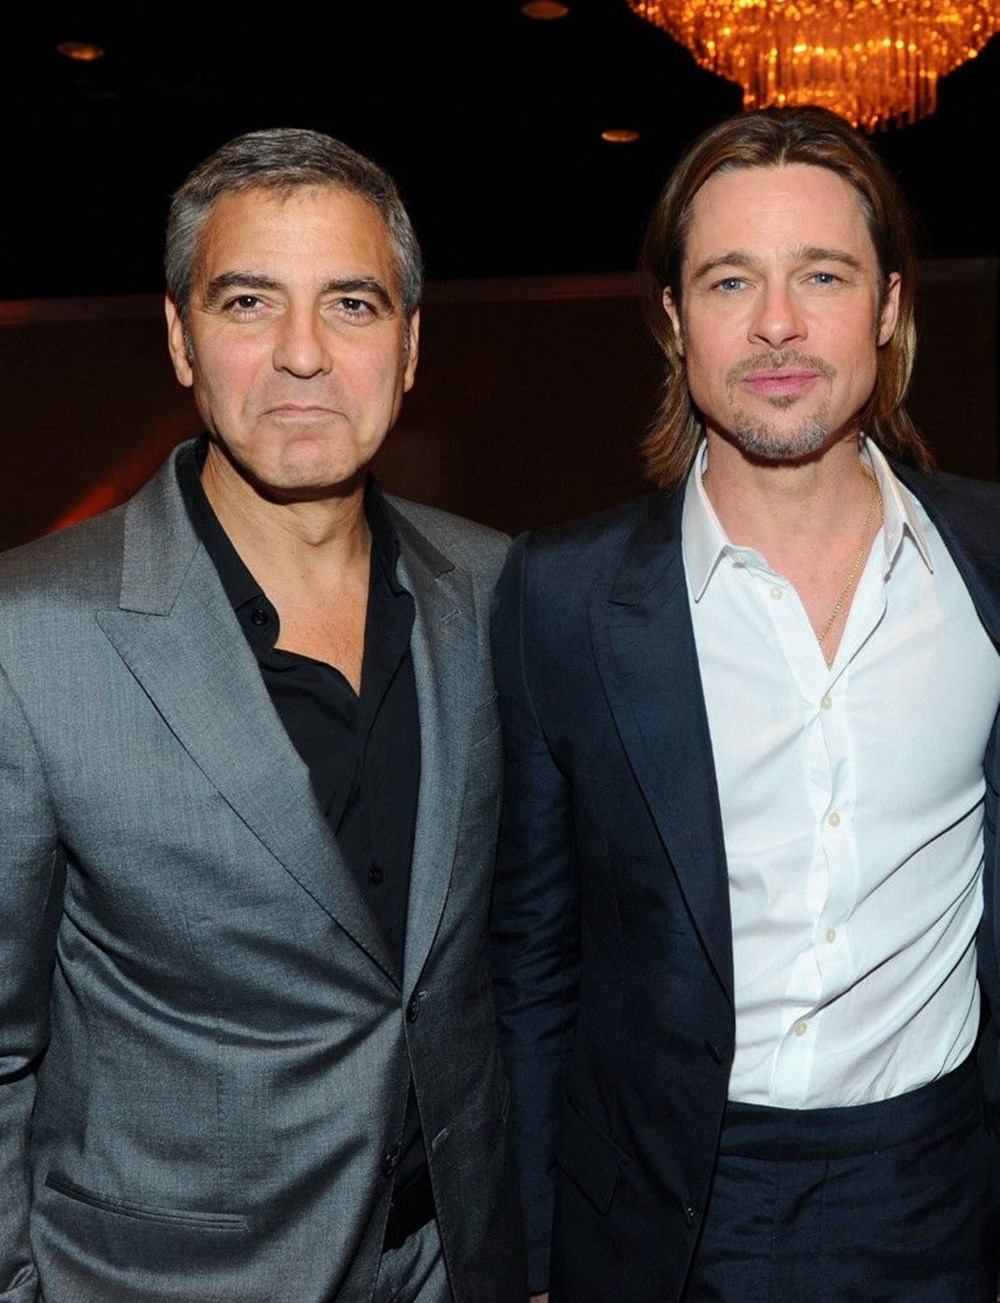 George Clooney ve Brad Pitt yllar sonra yeniden